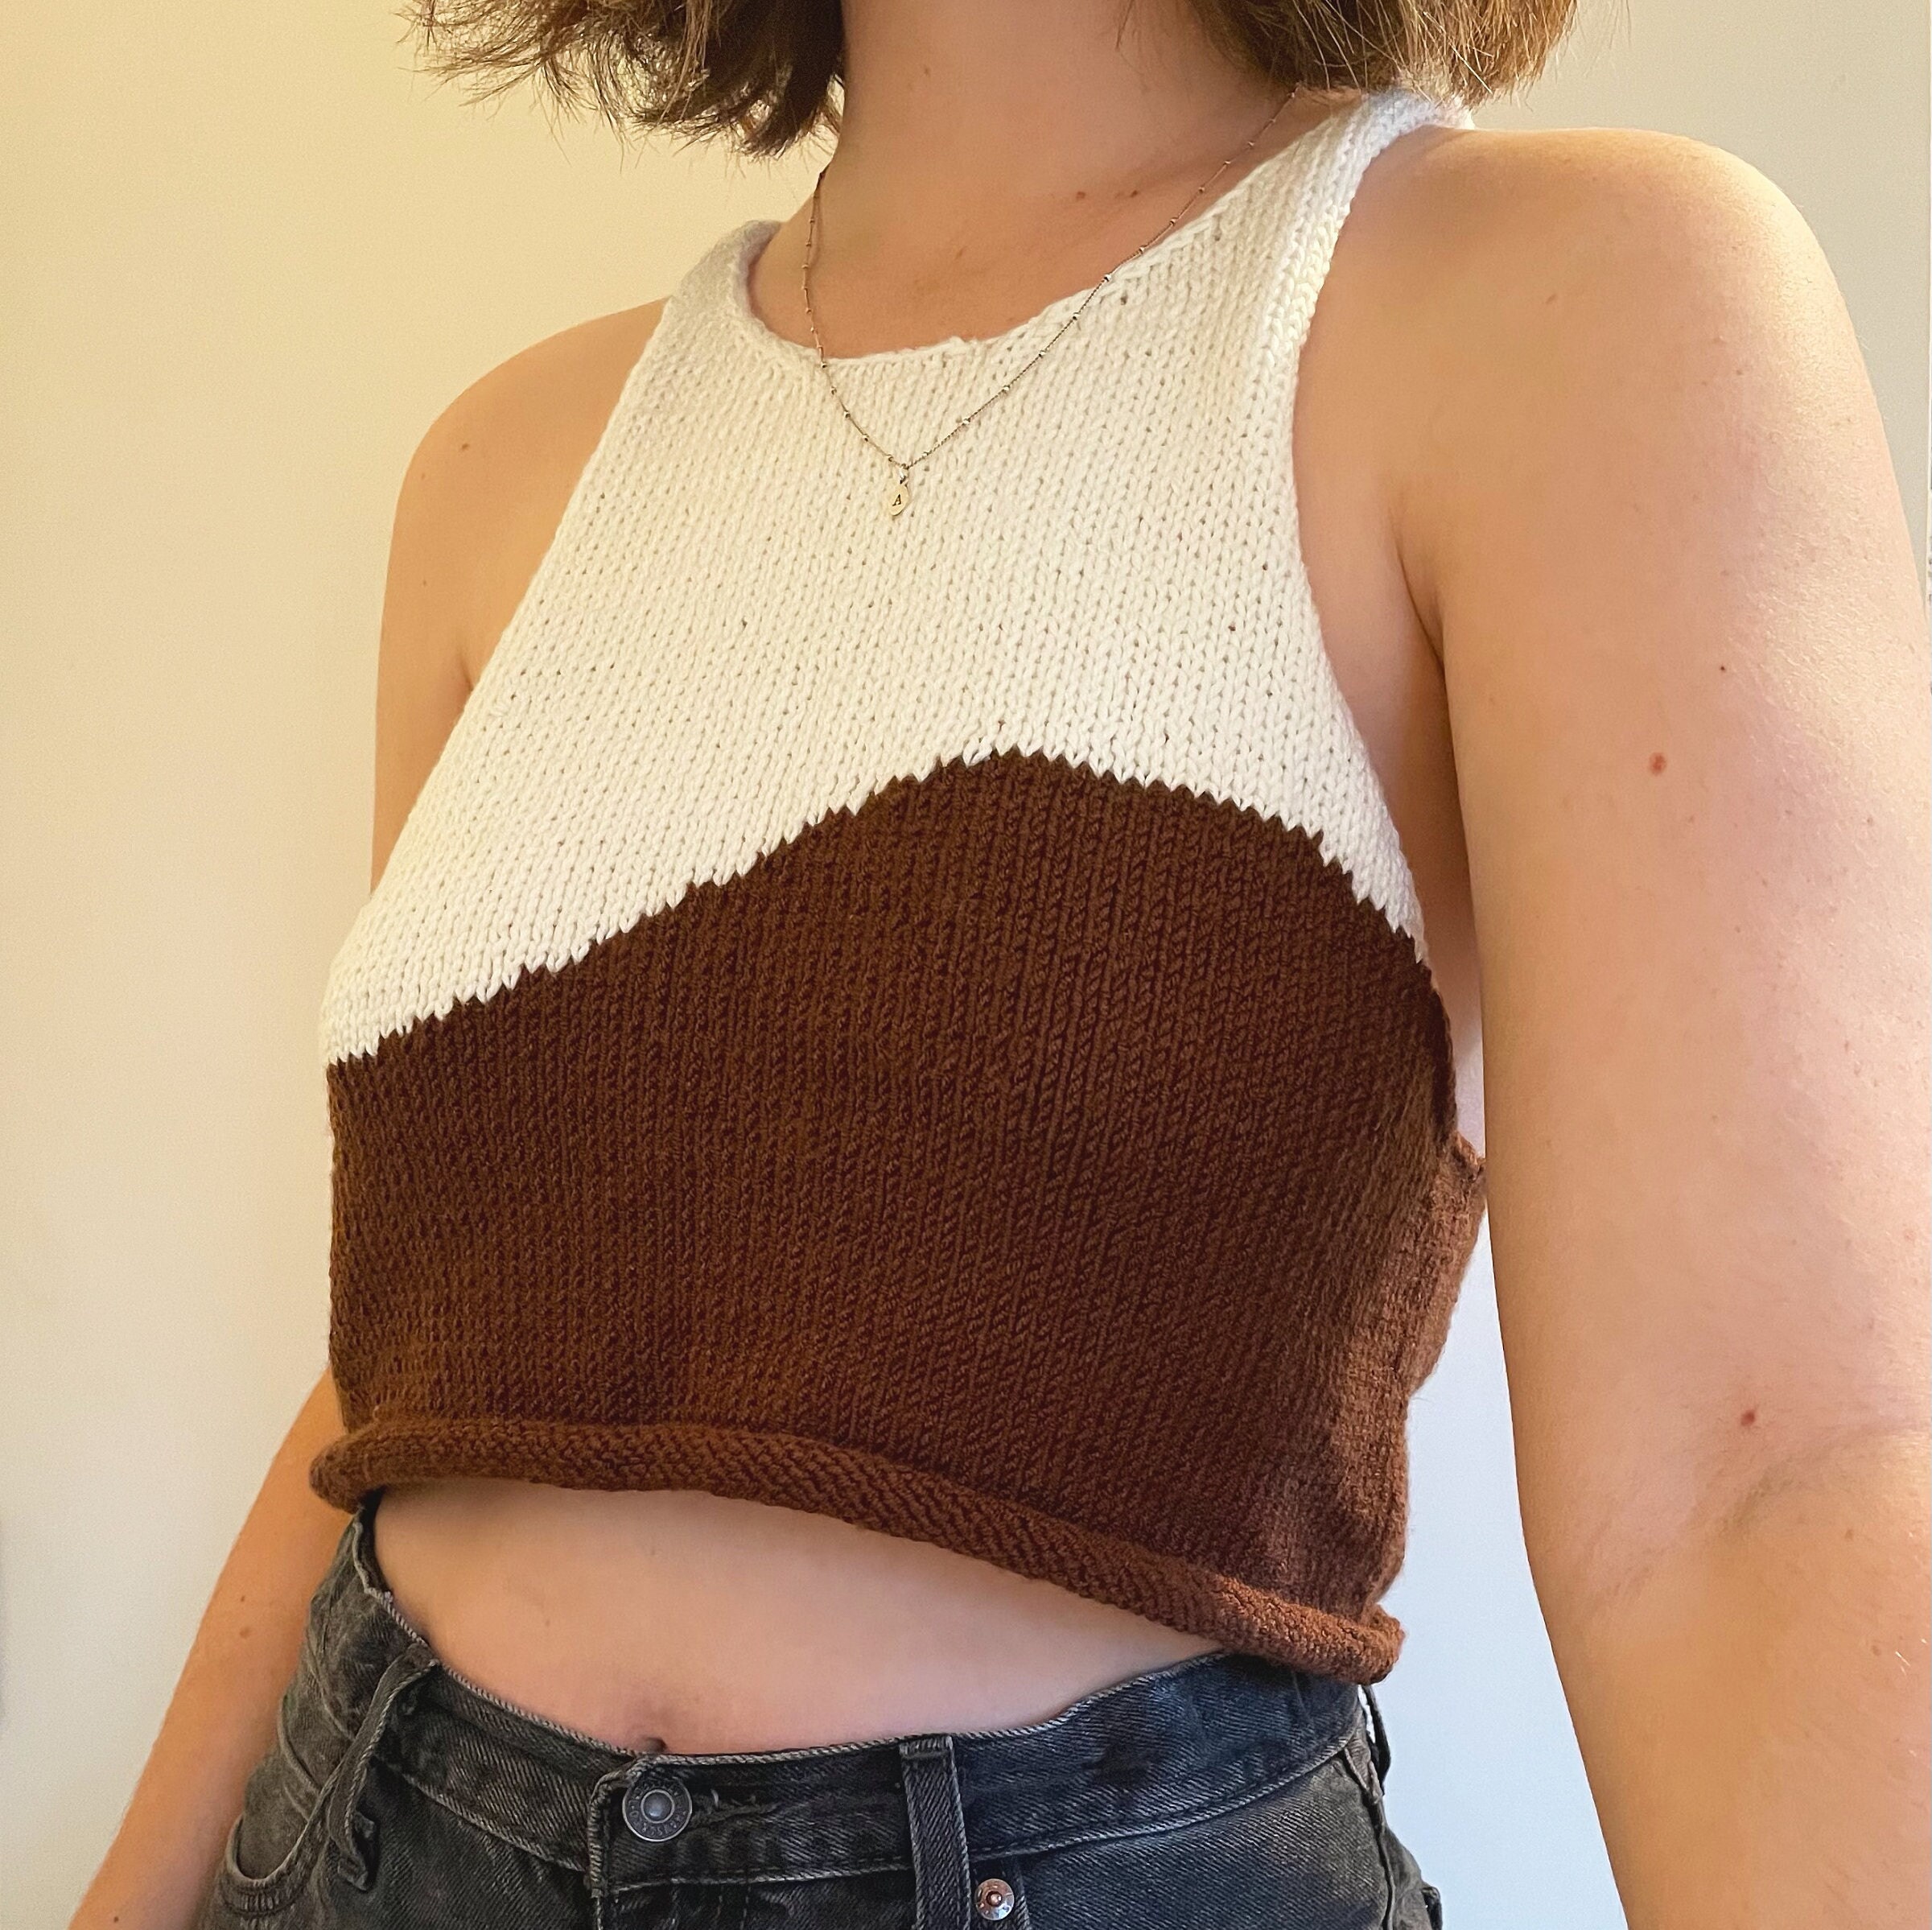 Knitted Summer Crop Top Pattern